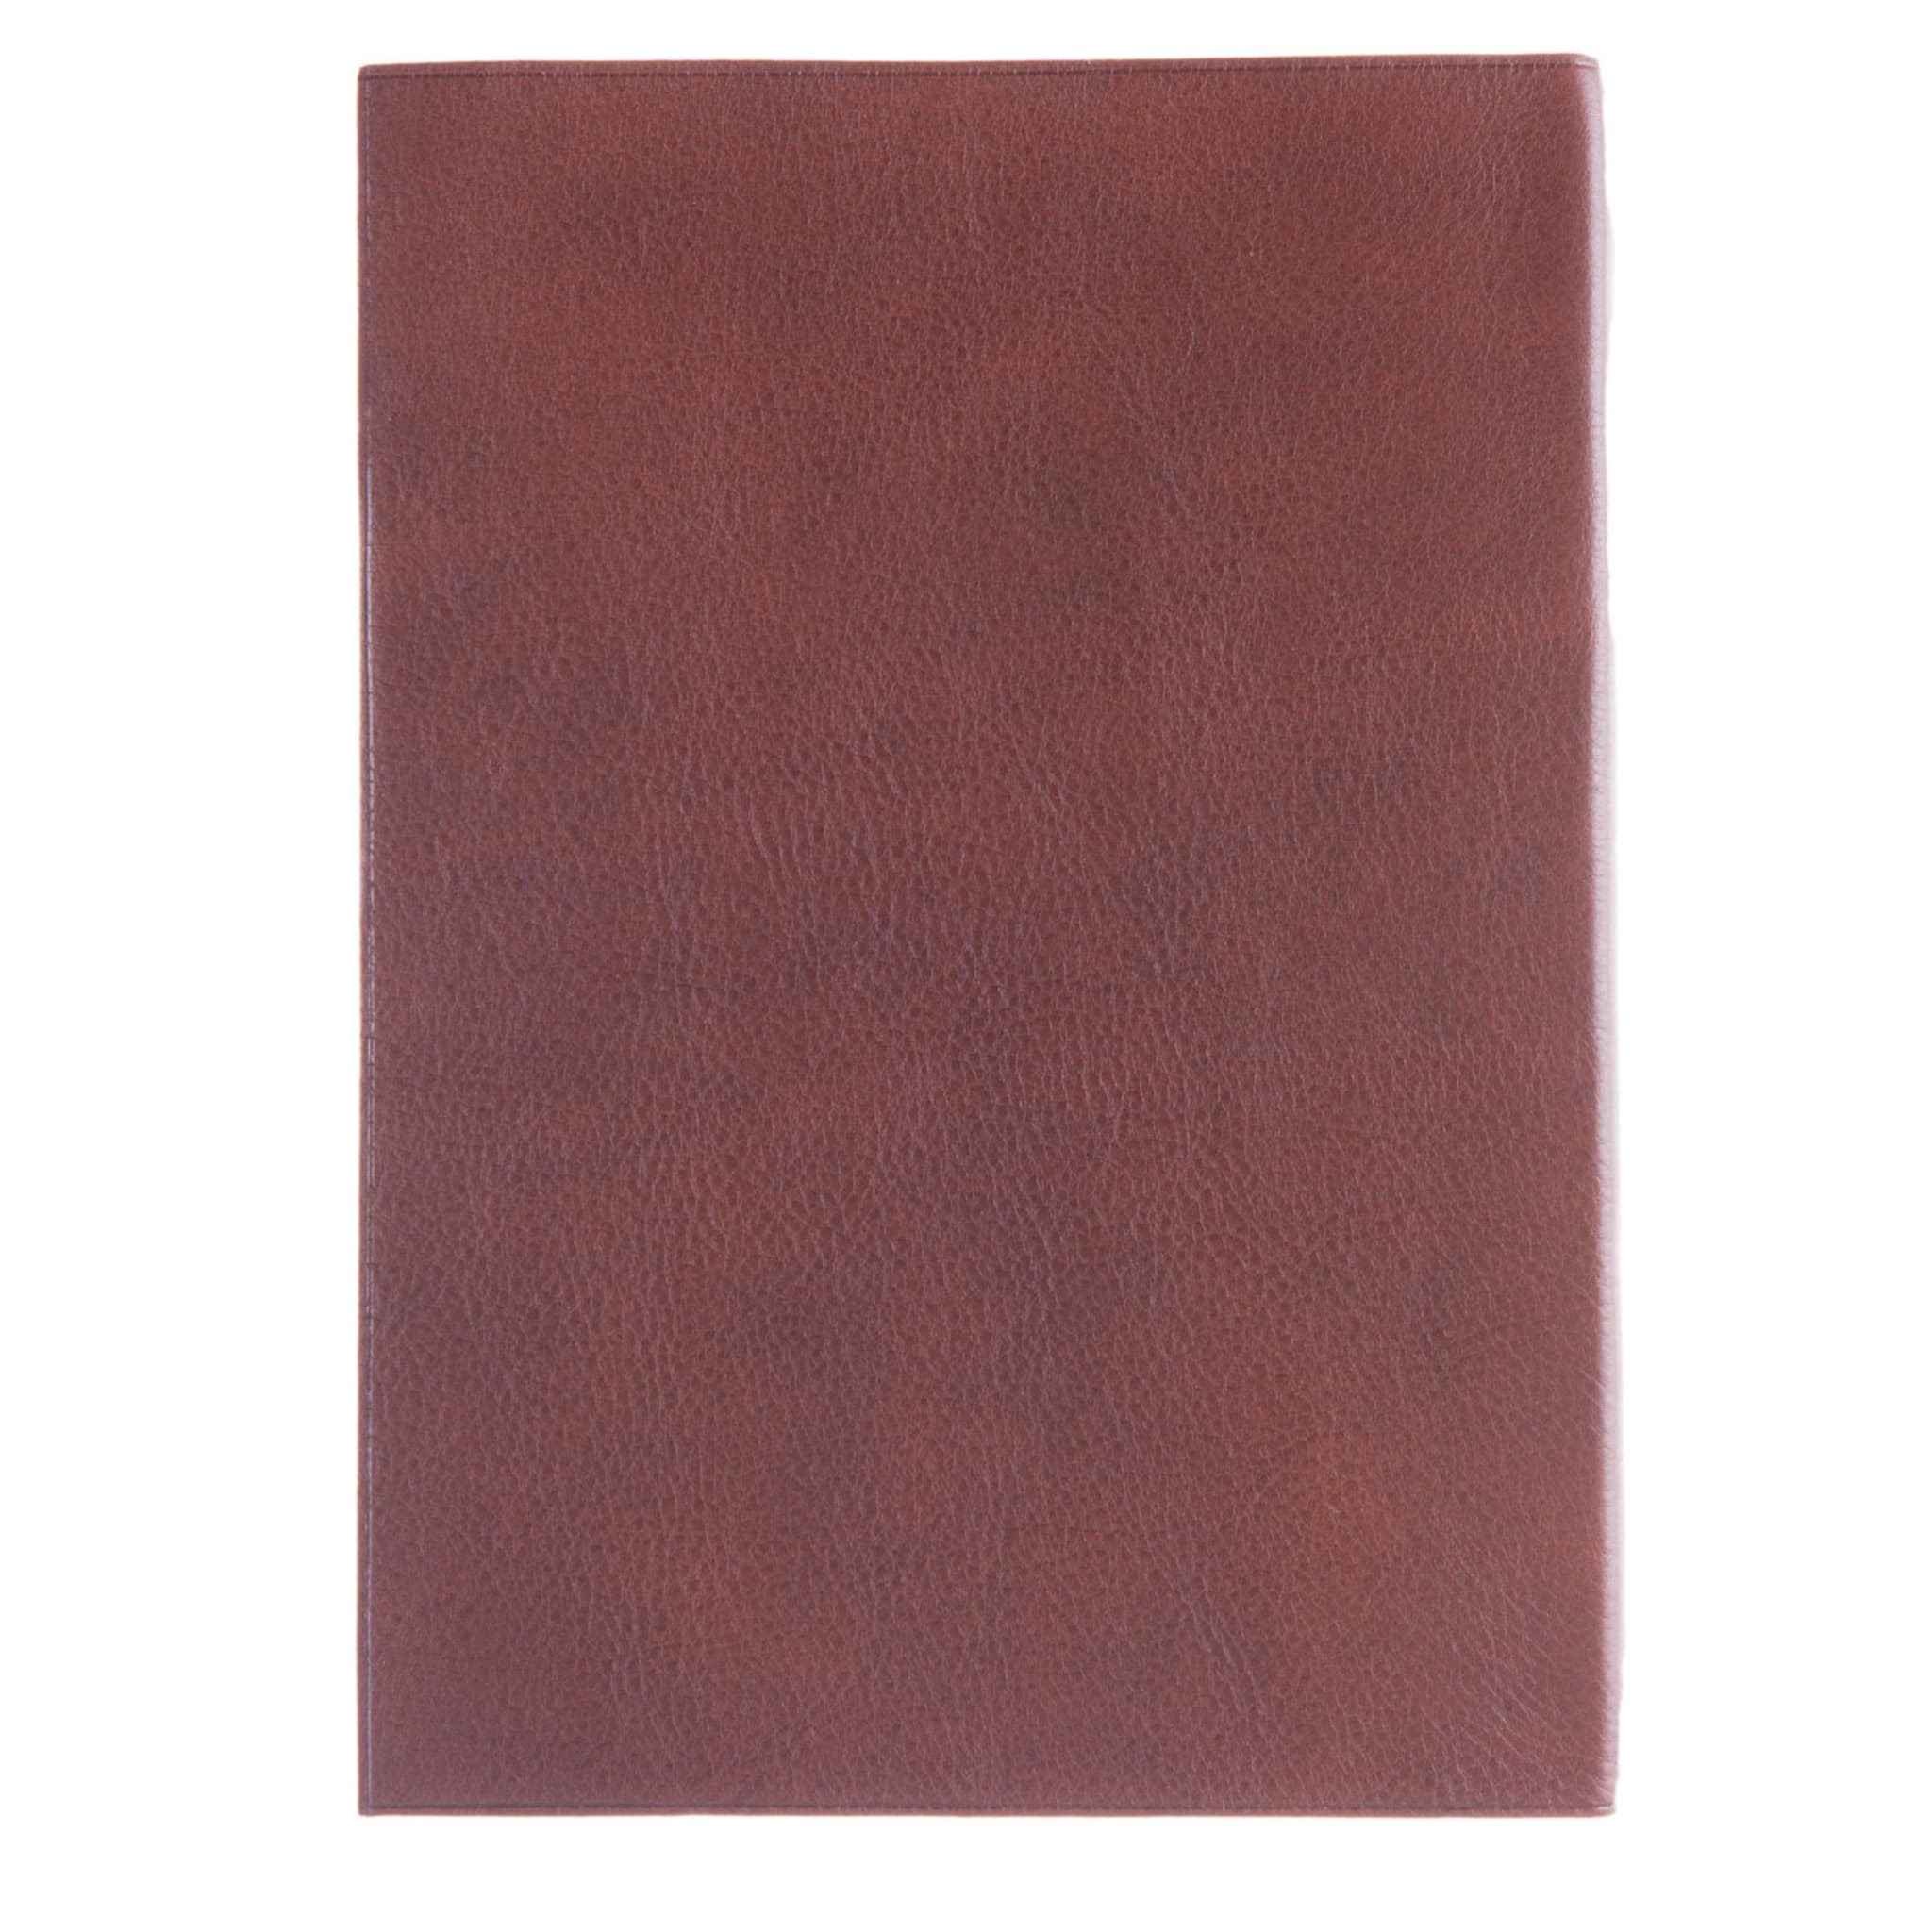 Notizbuch aus braunem Leder - Alternative Ansicht 1